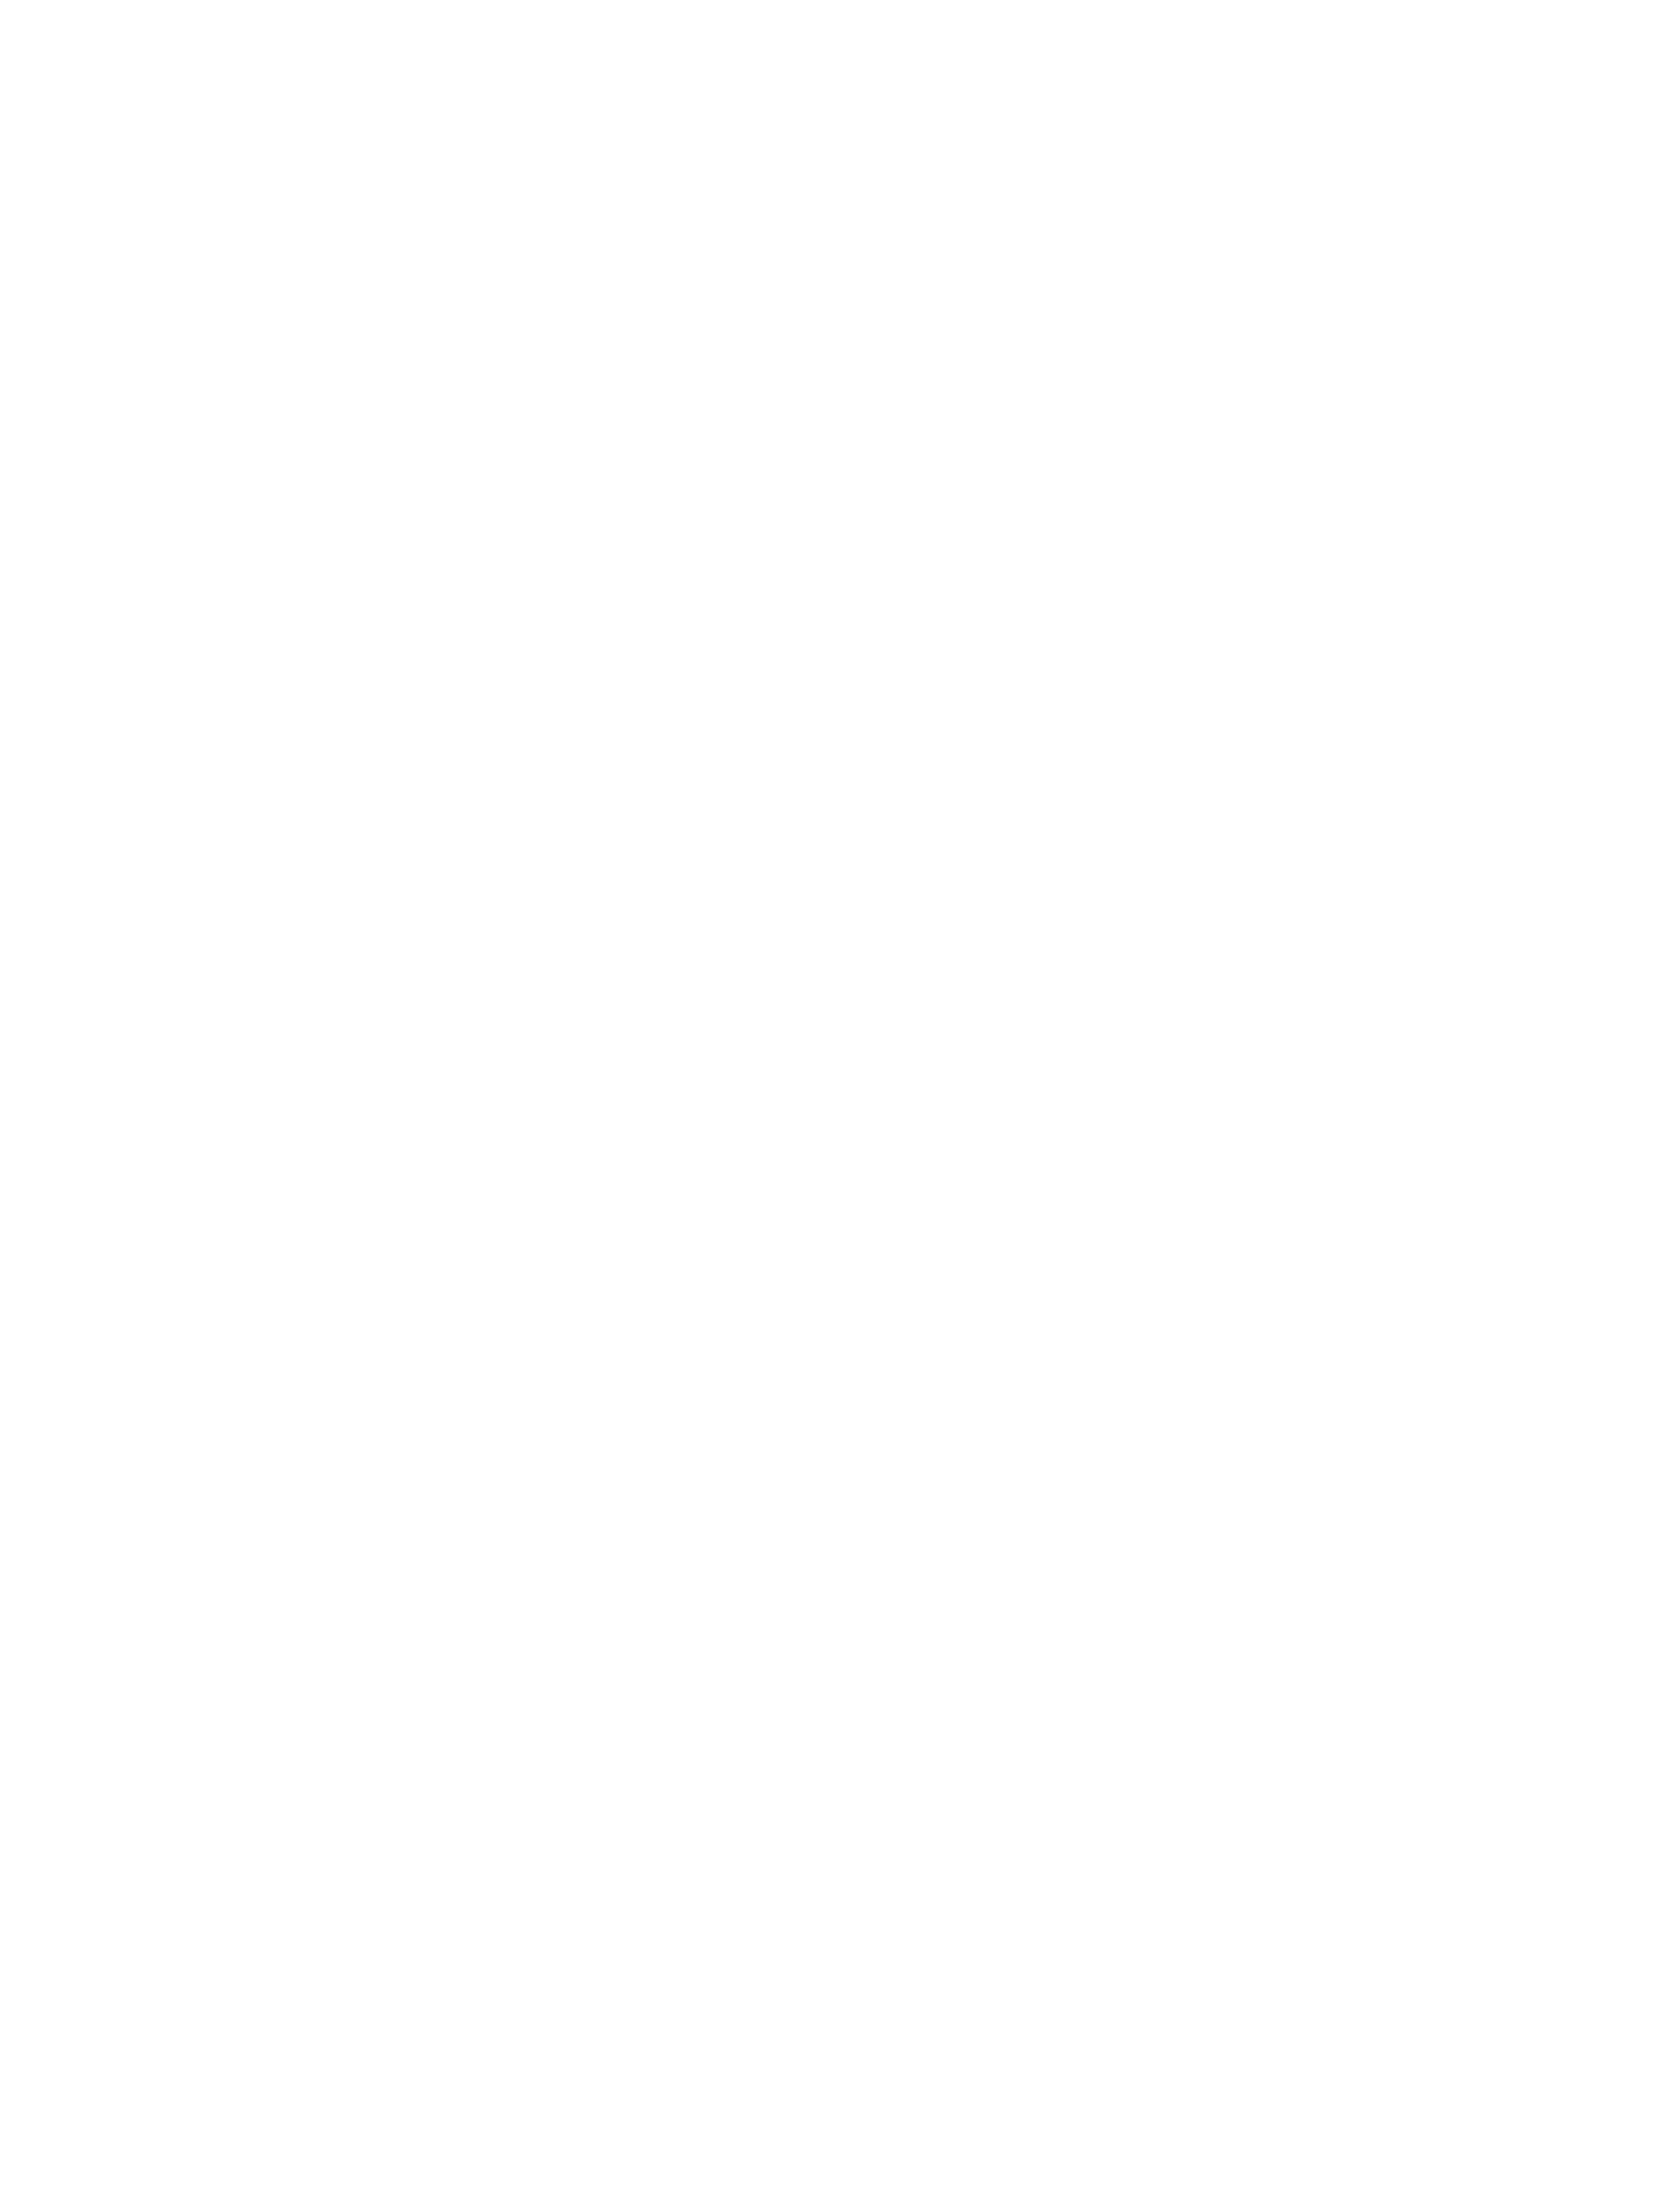 BISSON-CASTLES Realty Group, LLC